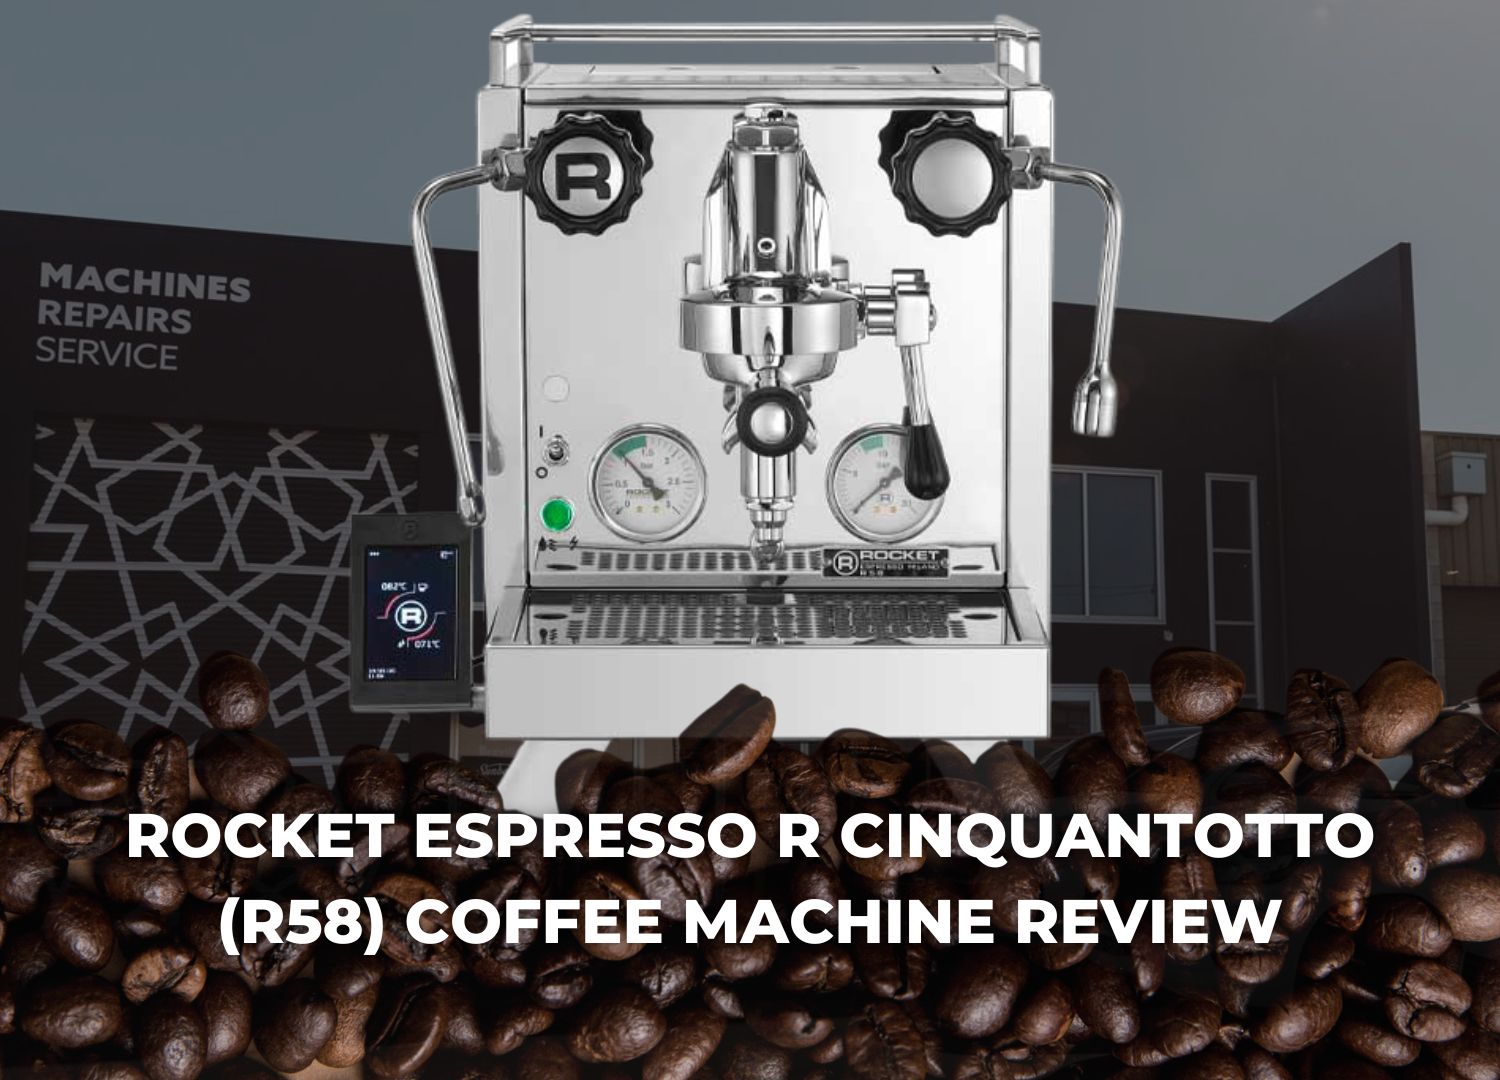 Rocket Espresso R Cinquantotto (R58) coffee machine placed infront of the Coffee Complex shop.